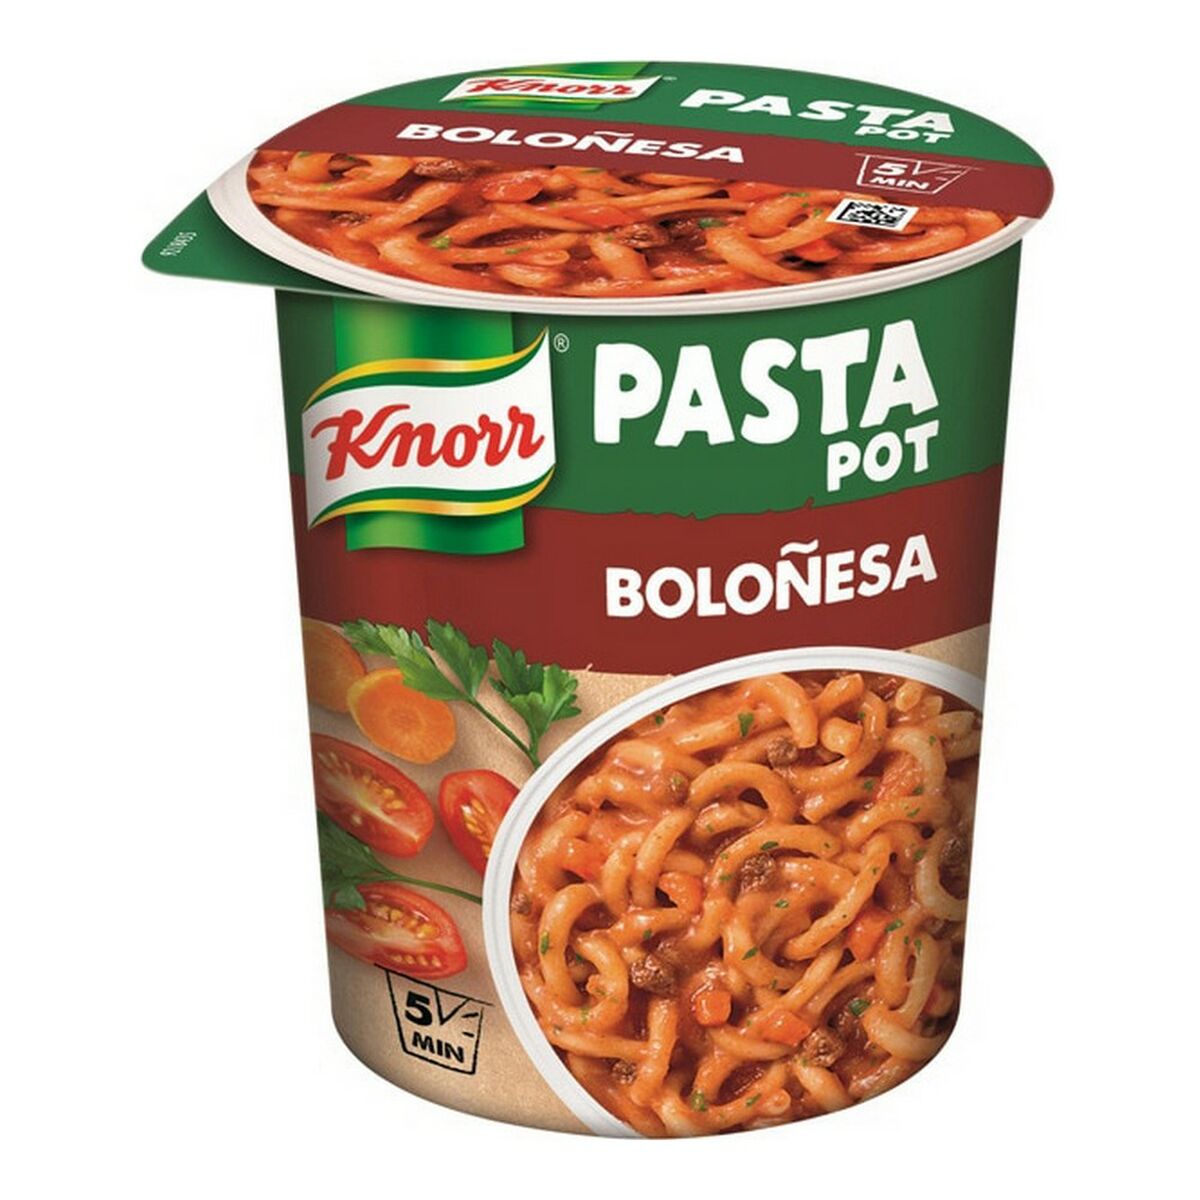 Spirali Knorr Pasta Pot Salsa al Ragù alla Bolognese (65 g)